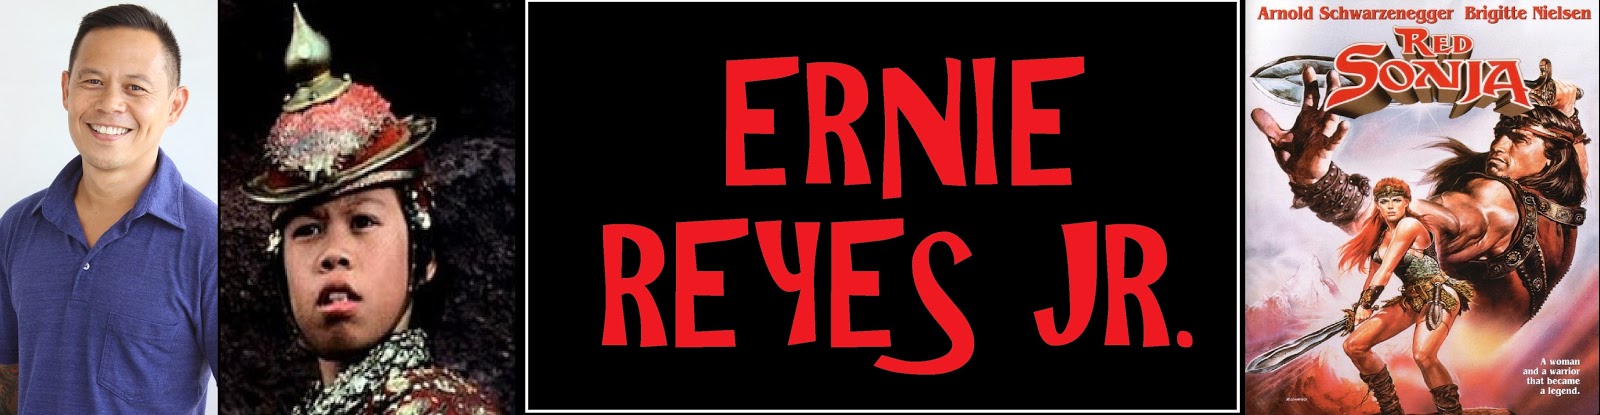 TVStoreOnline Blog: Actor Ernie Reyes Jr. talks with TV STORE ONLINE